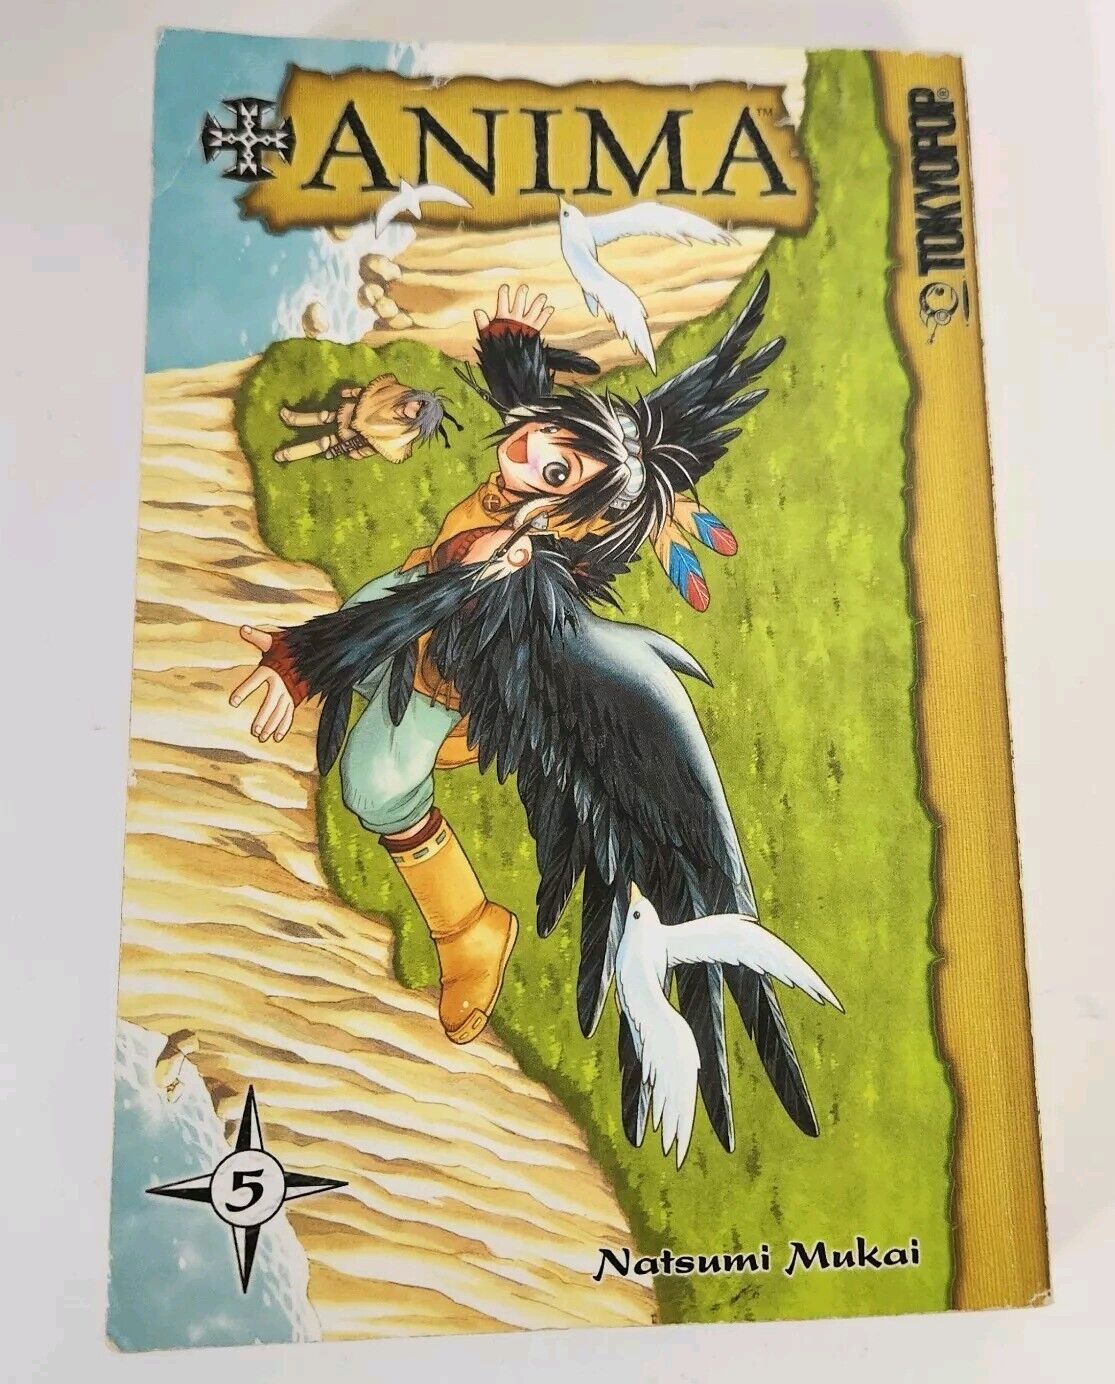 Anima, Vol. 5 Toykopop Manga  Natsumi Mukai   